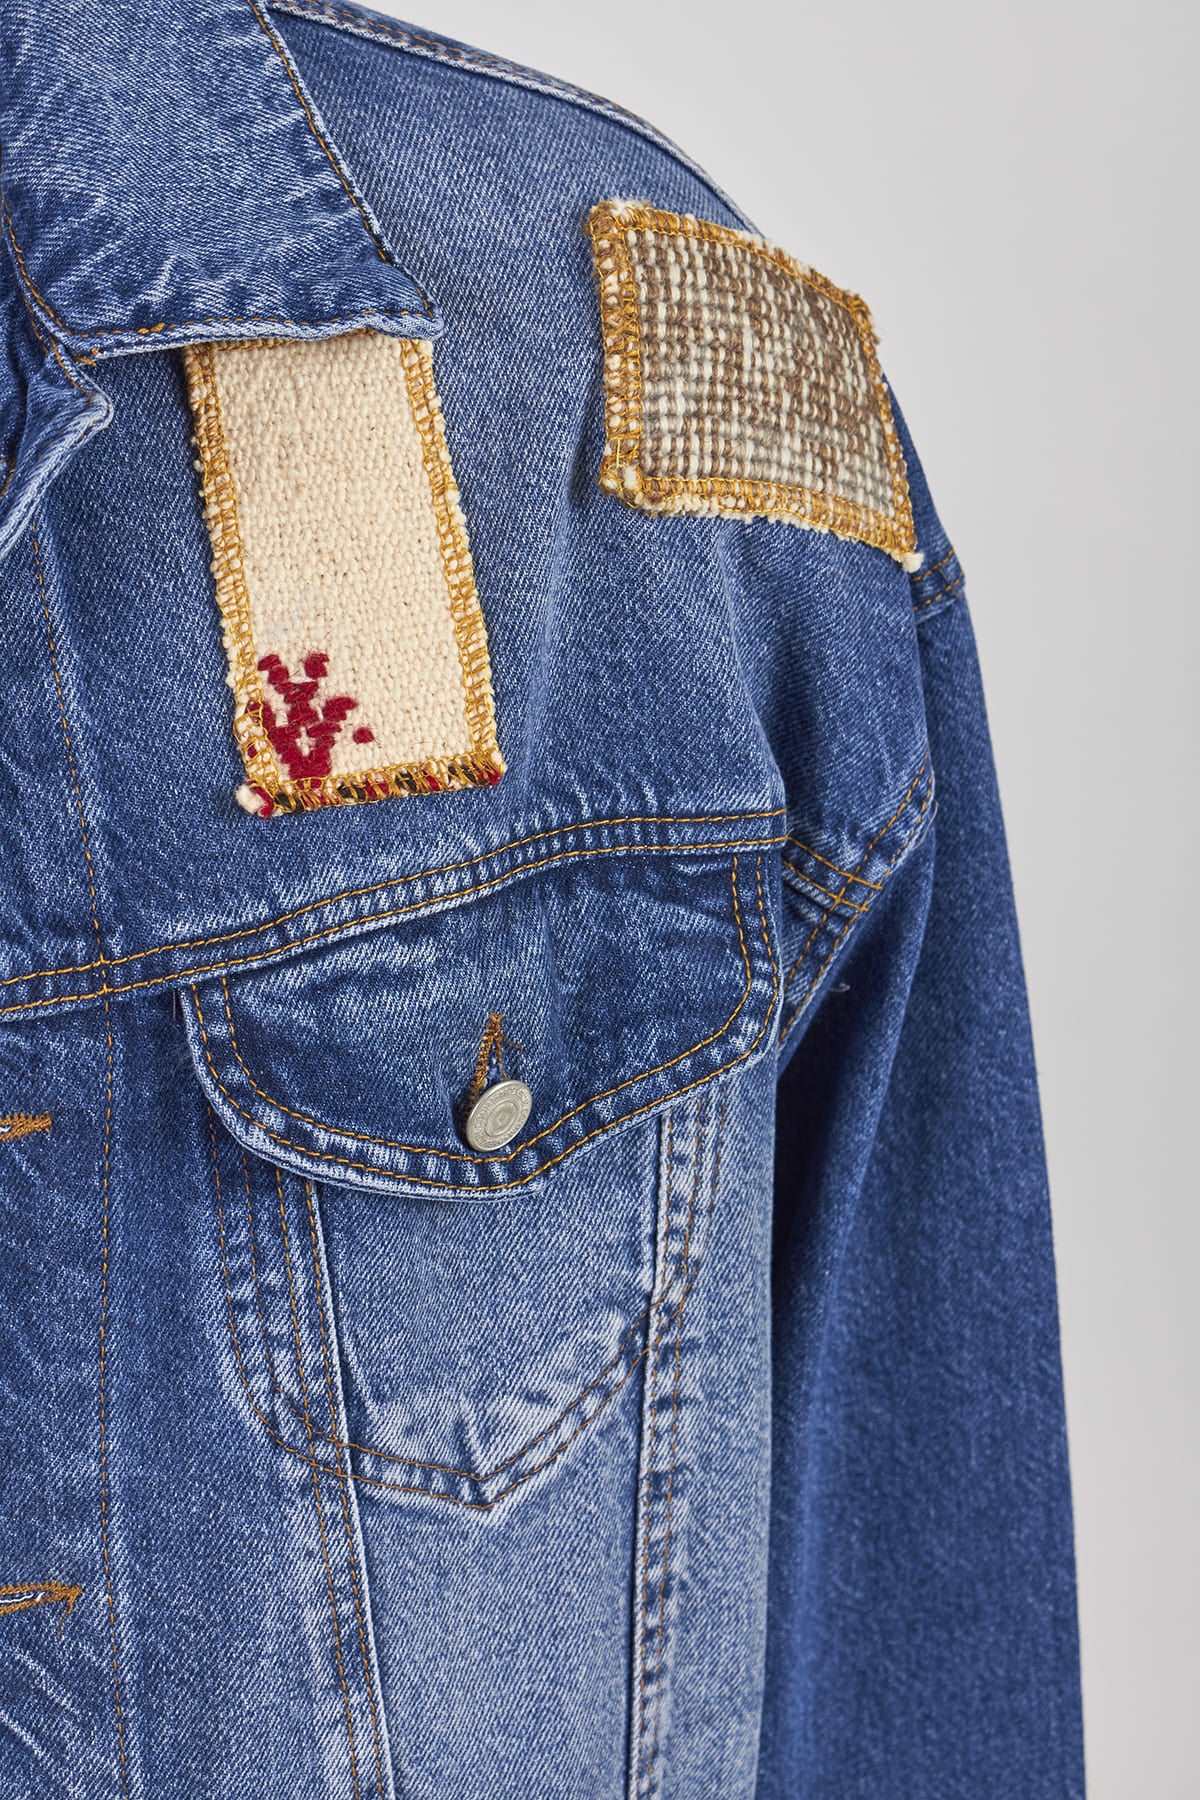 vintage-denim-1970s-jeans-jacket-tapis-turkey